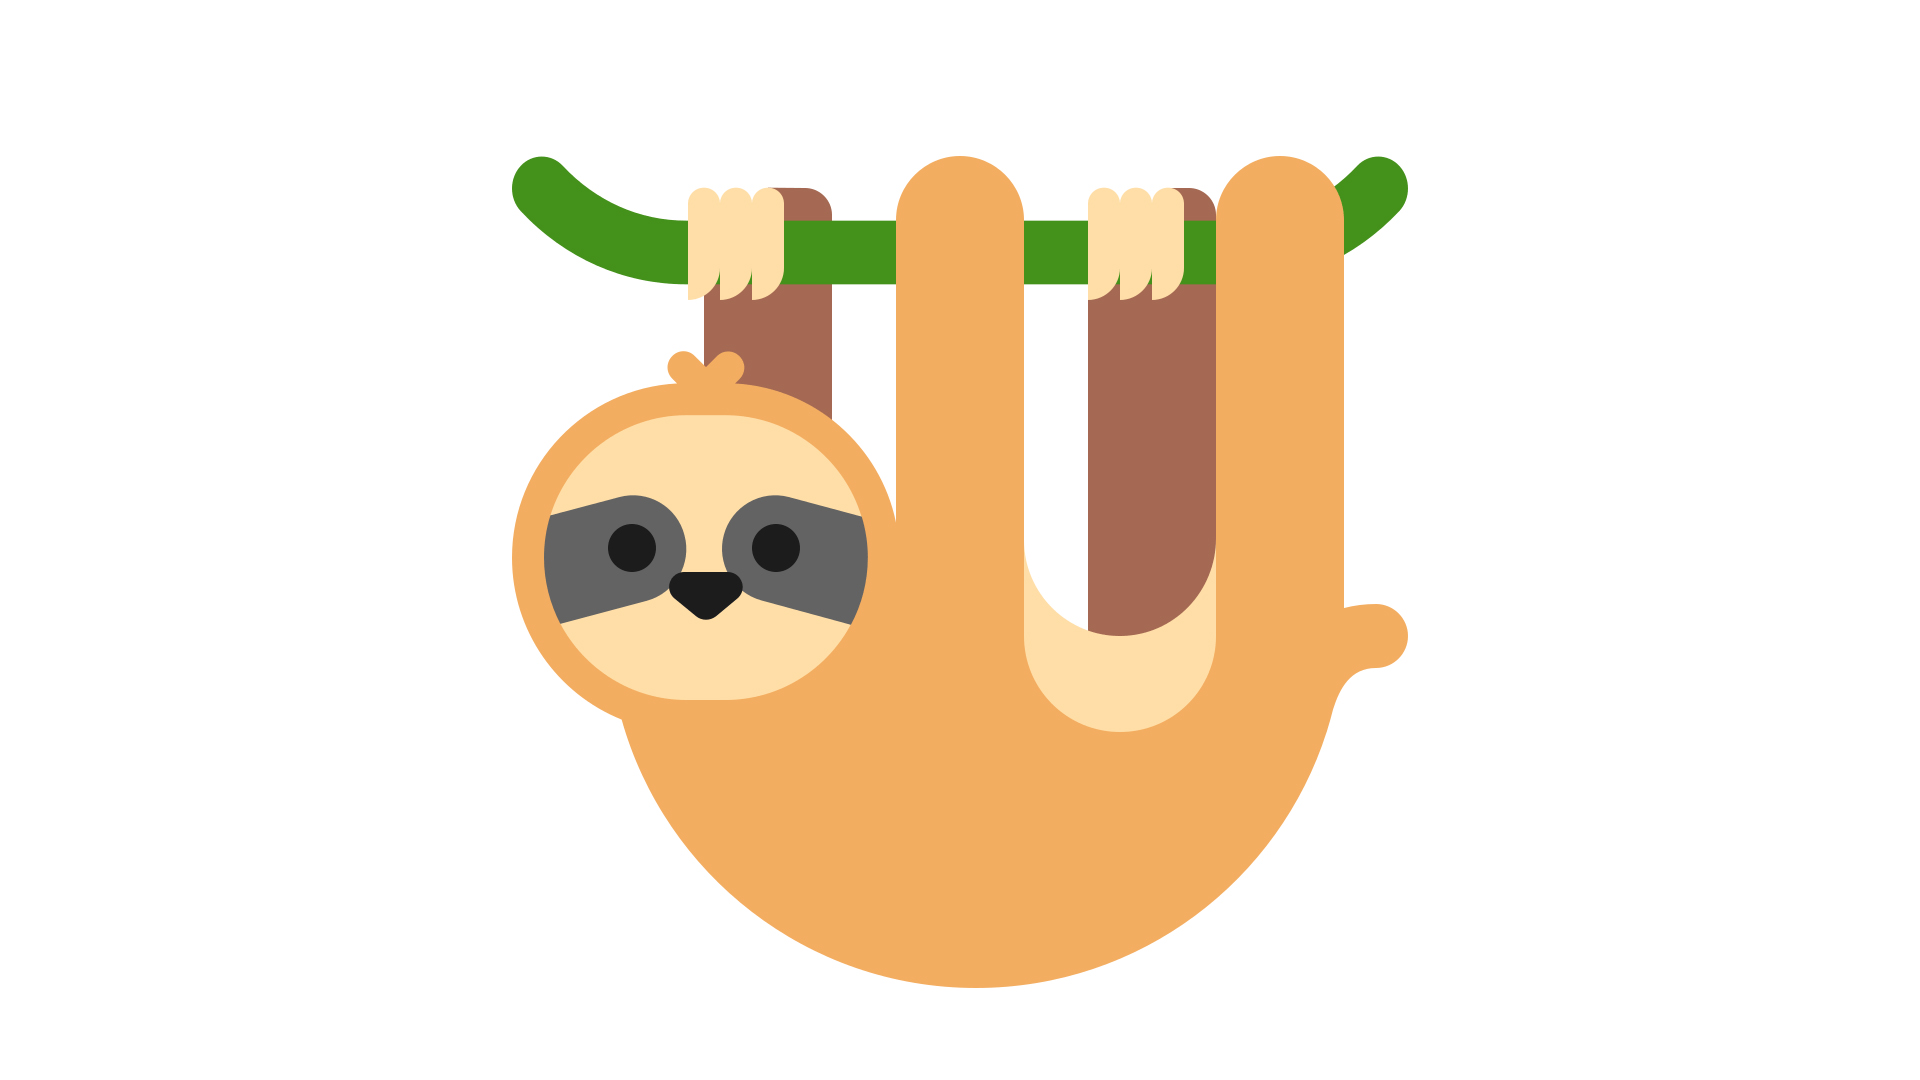 The Windows sloth emoji